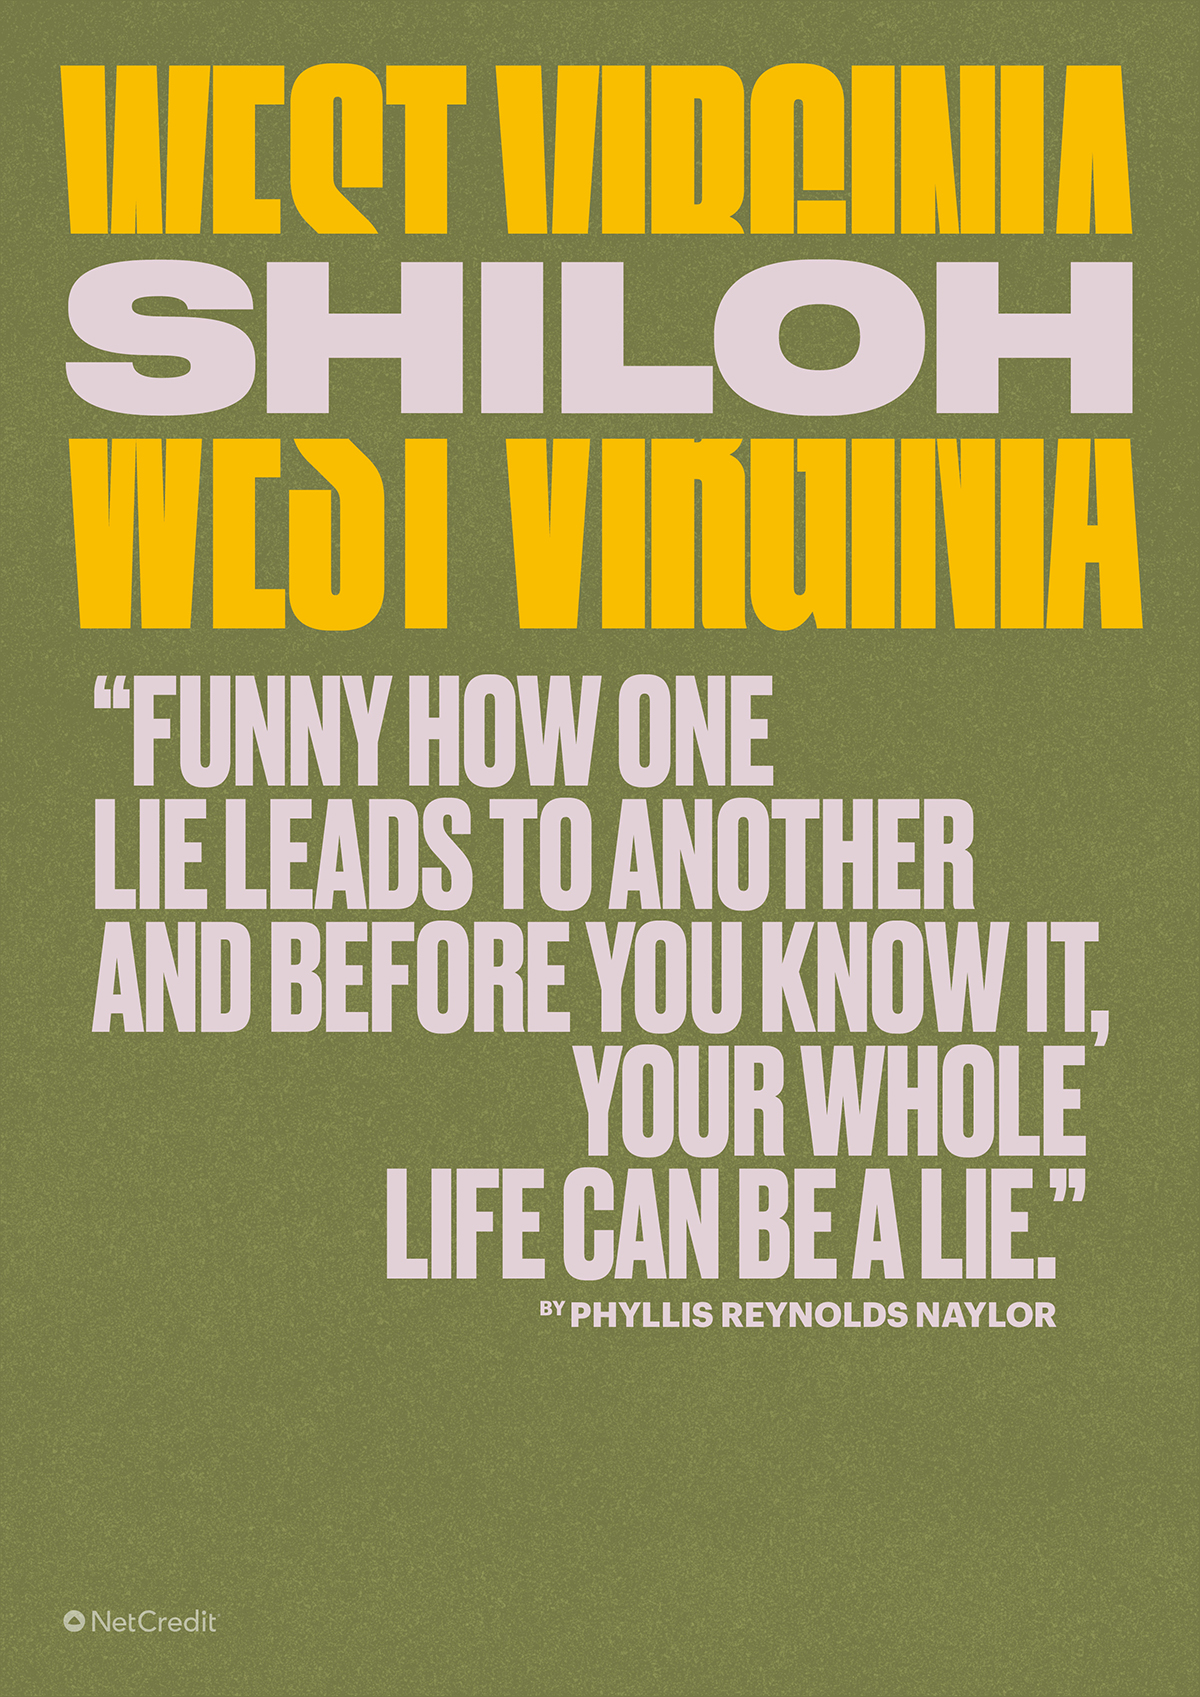 Shiloh West Virginia